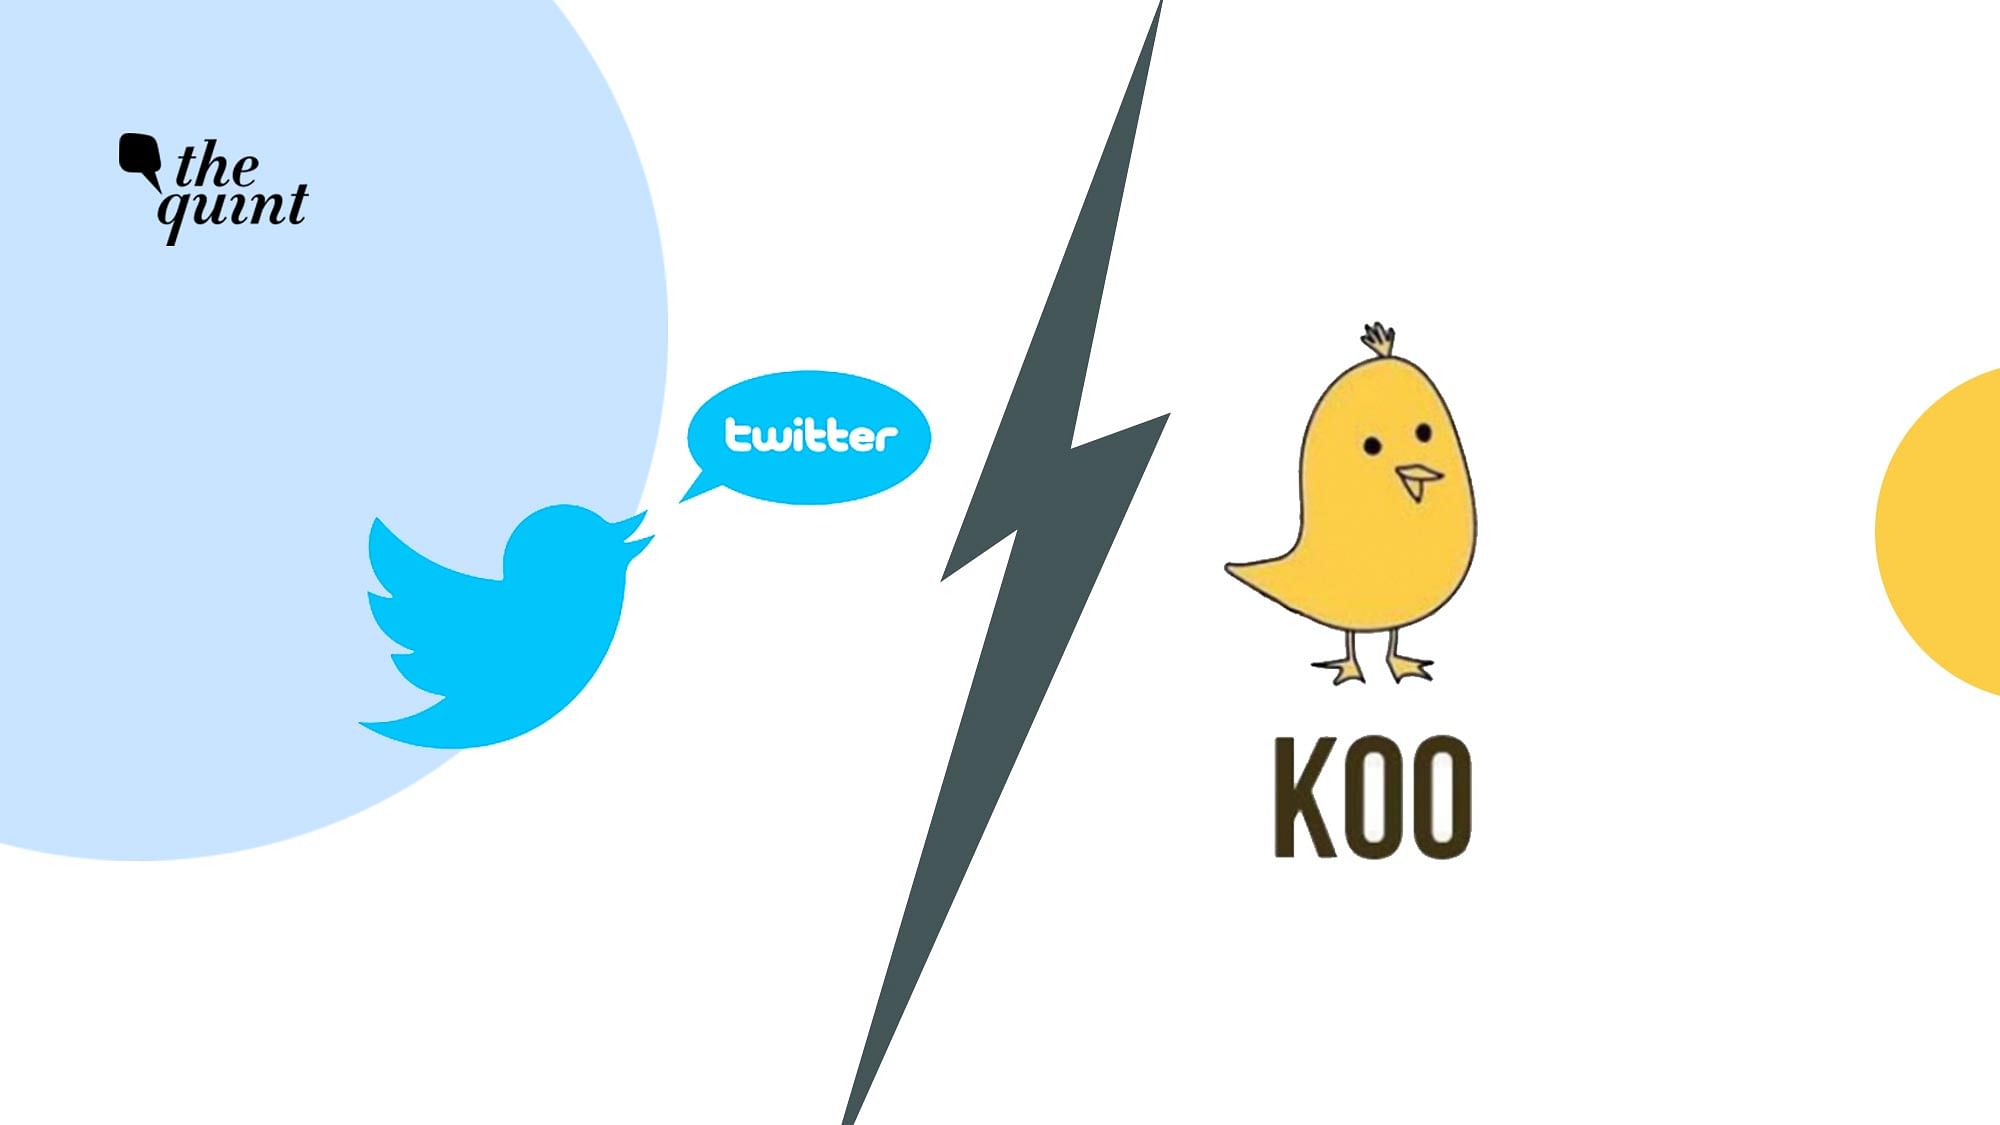 Symbols of Twitter &amp; KOO used for representational purposes.